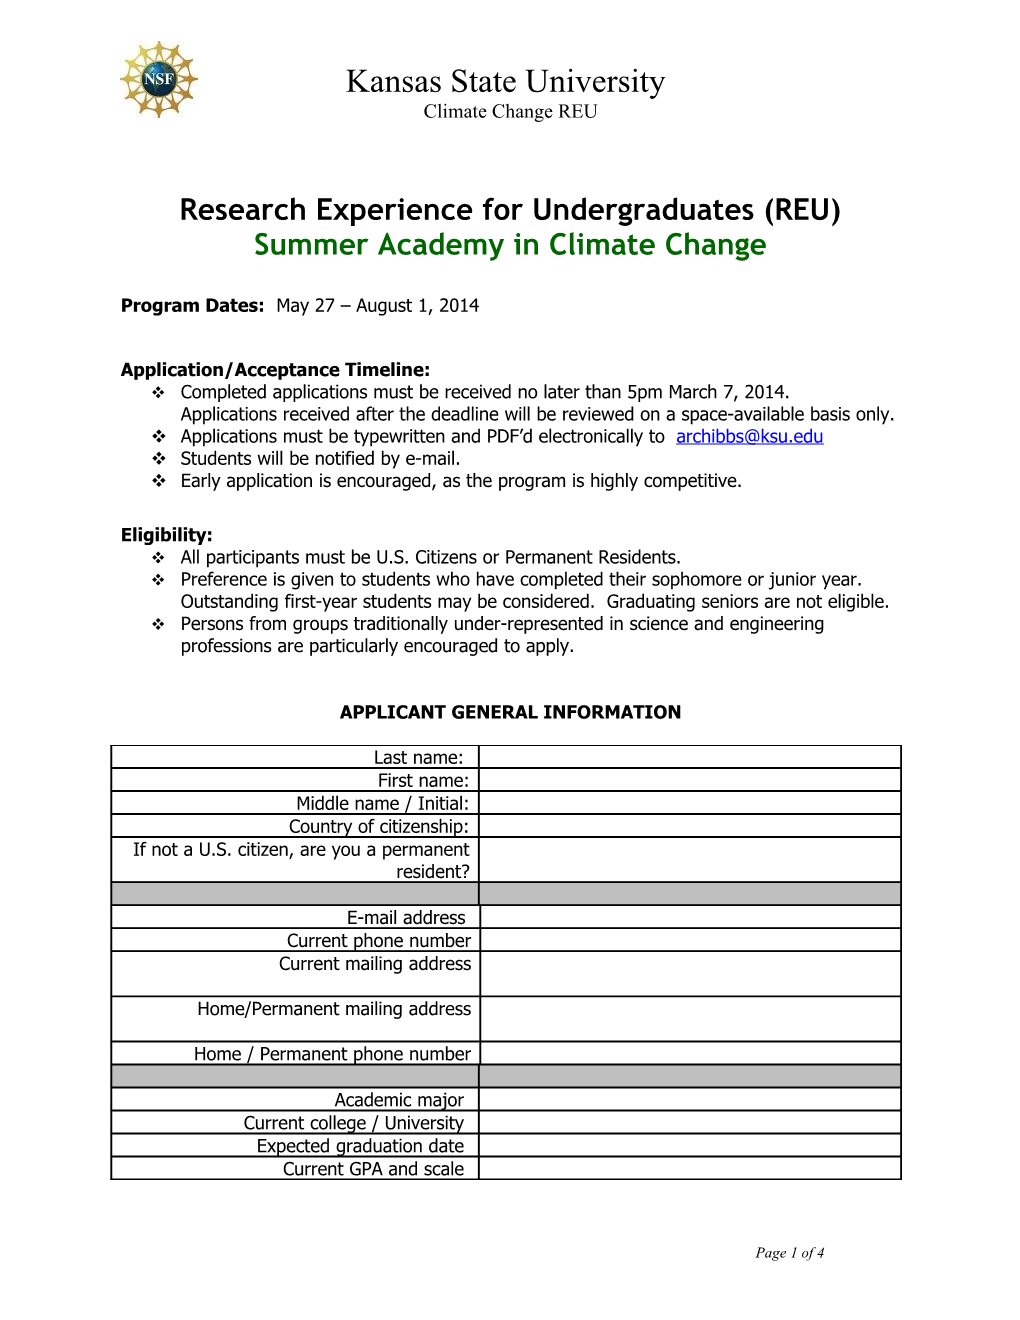 IGERT-IEB Undergraduate Research Fellowship Application